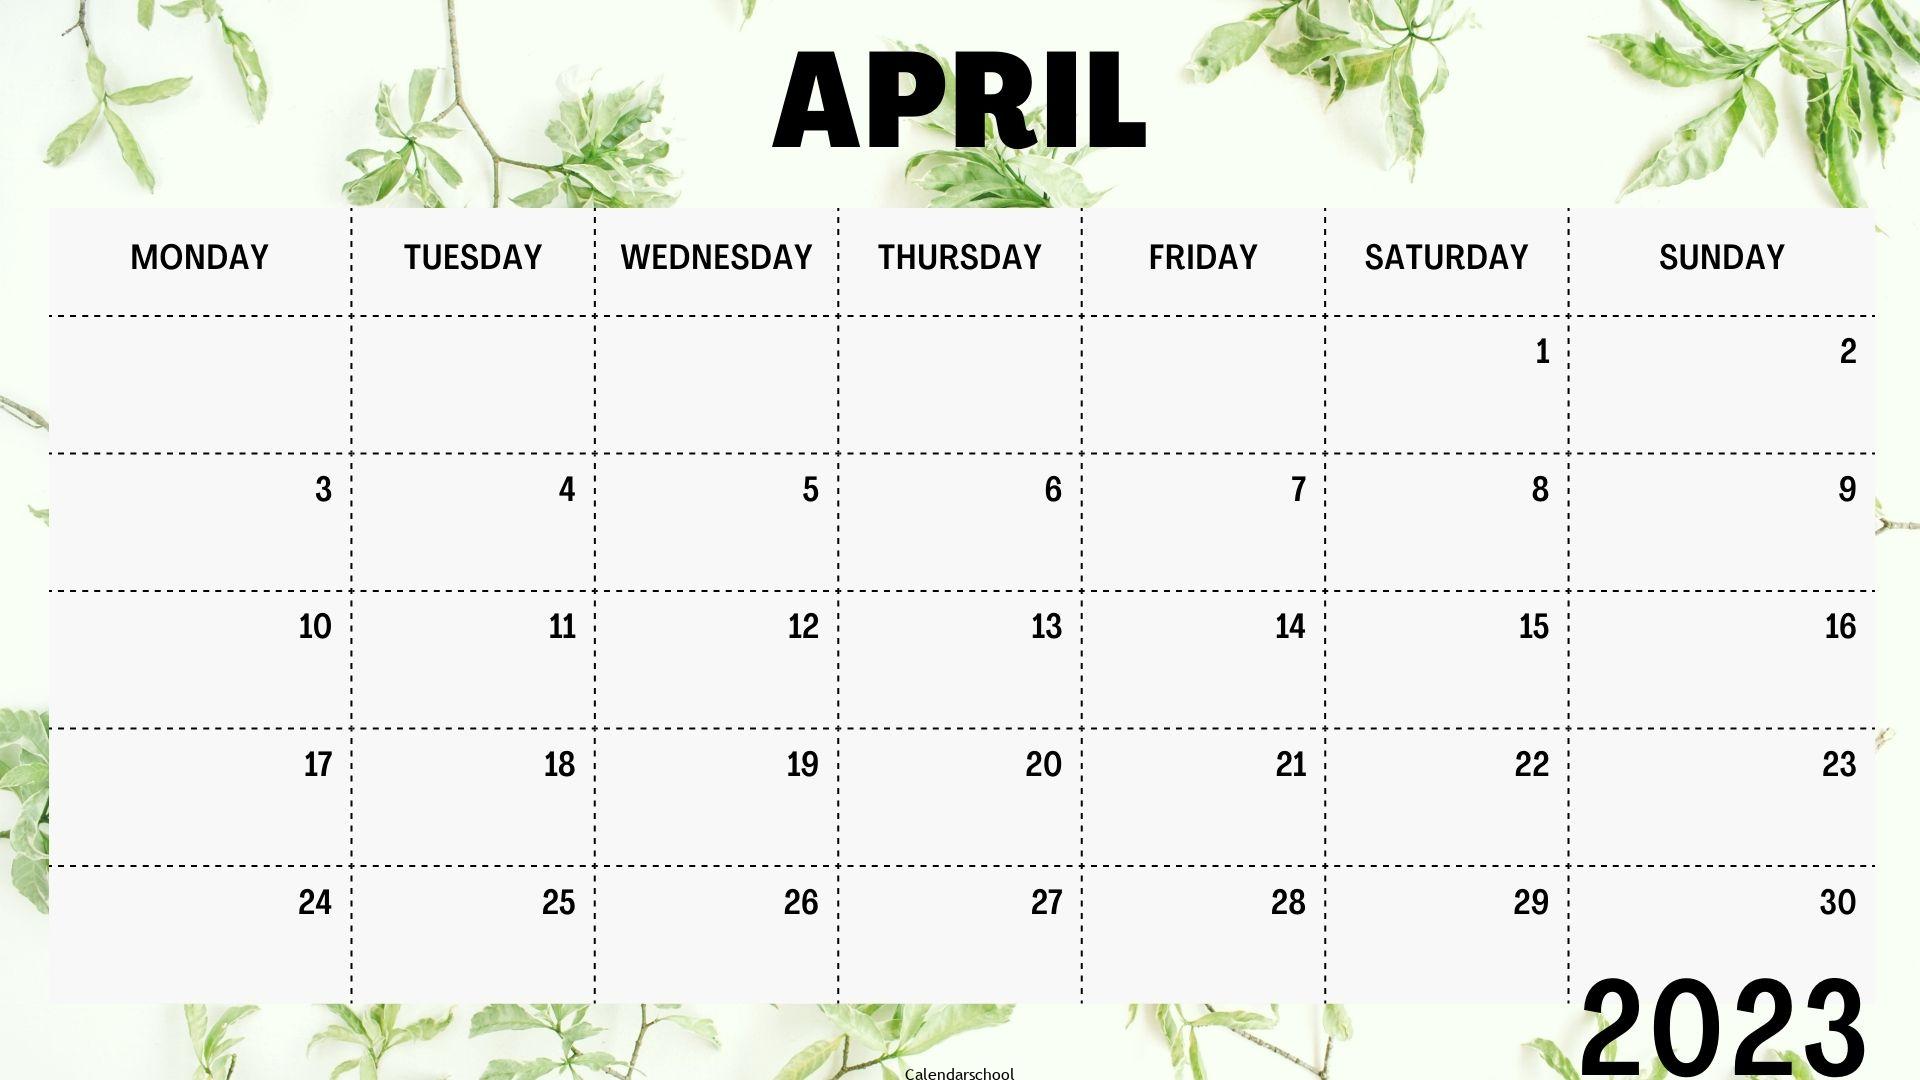 2023 April Calendar Template